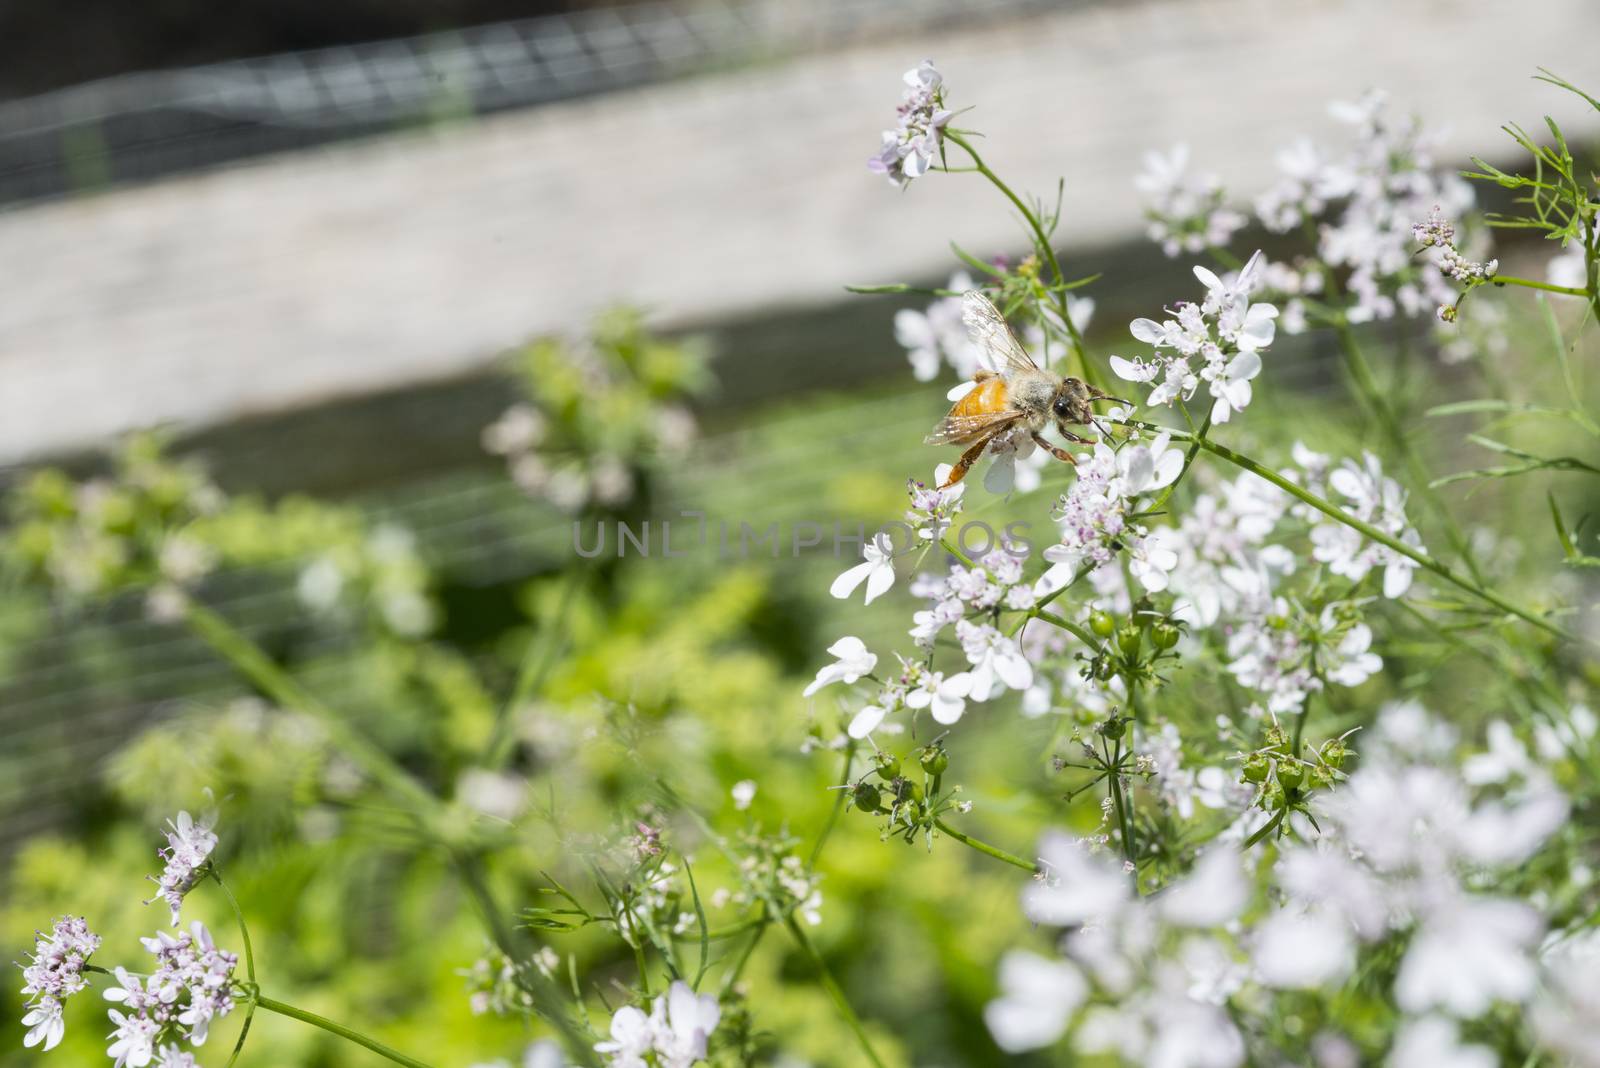 Western honey bee or European honey bee (Apis mellifera) on gard by Njean